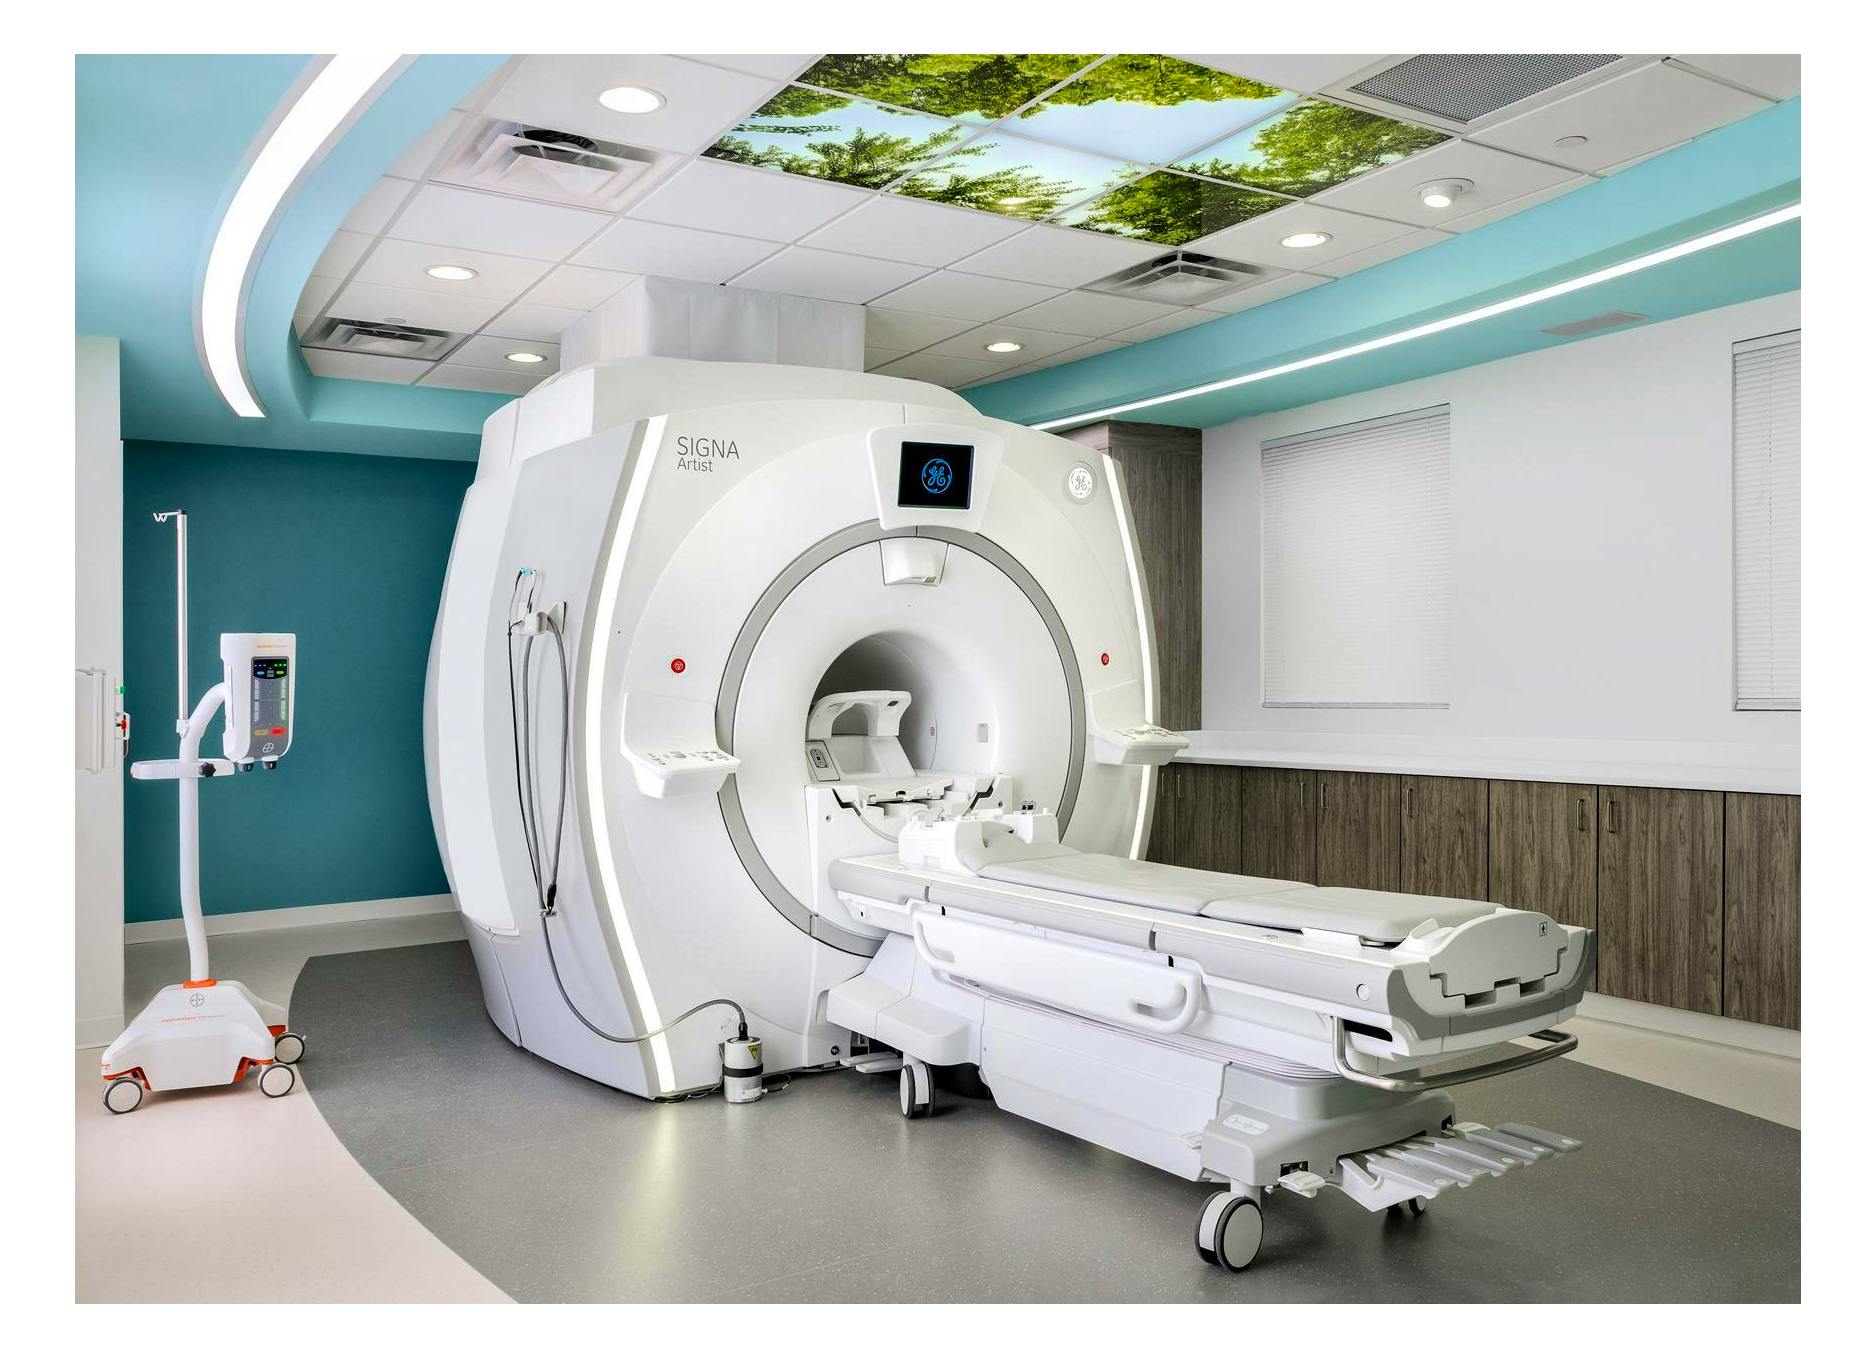 National MRI Scan Ltd